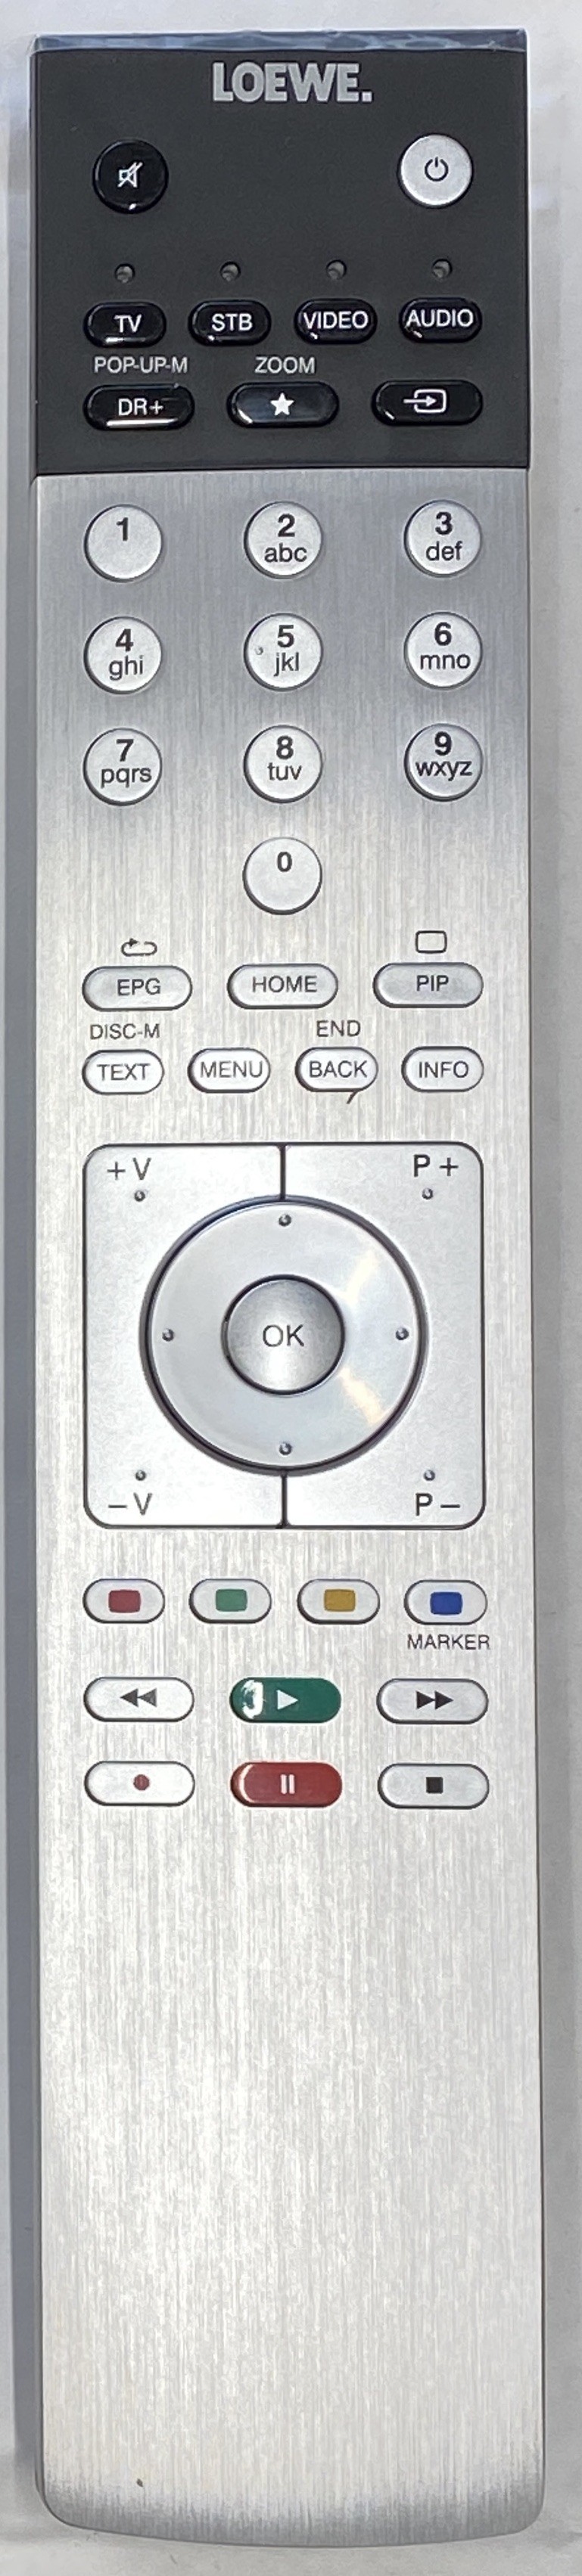 LOEWE 89900A23 Remote Control Original